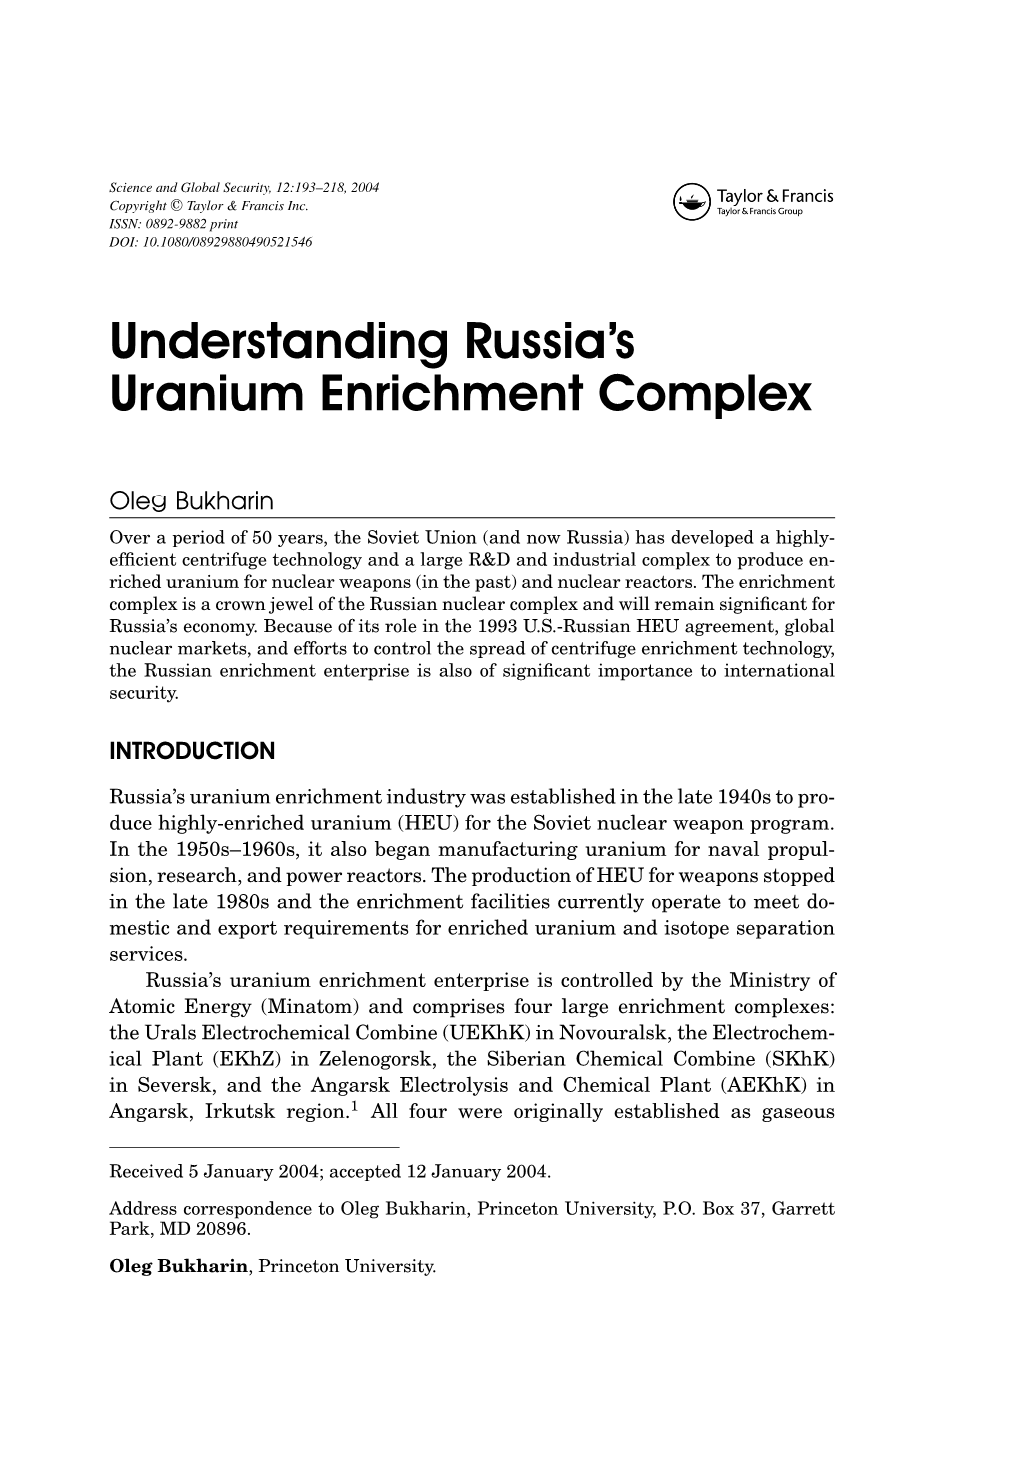 Understanding Russia's Uranium Enrichment Complex